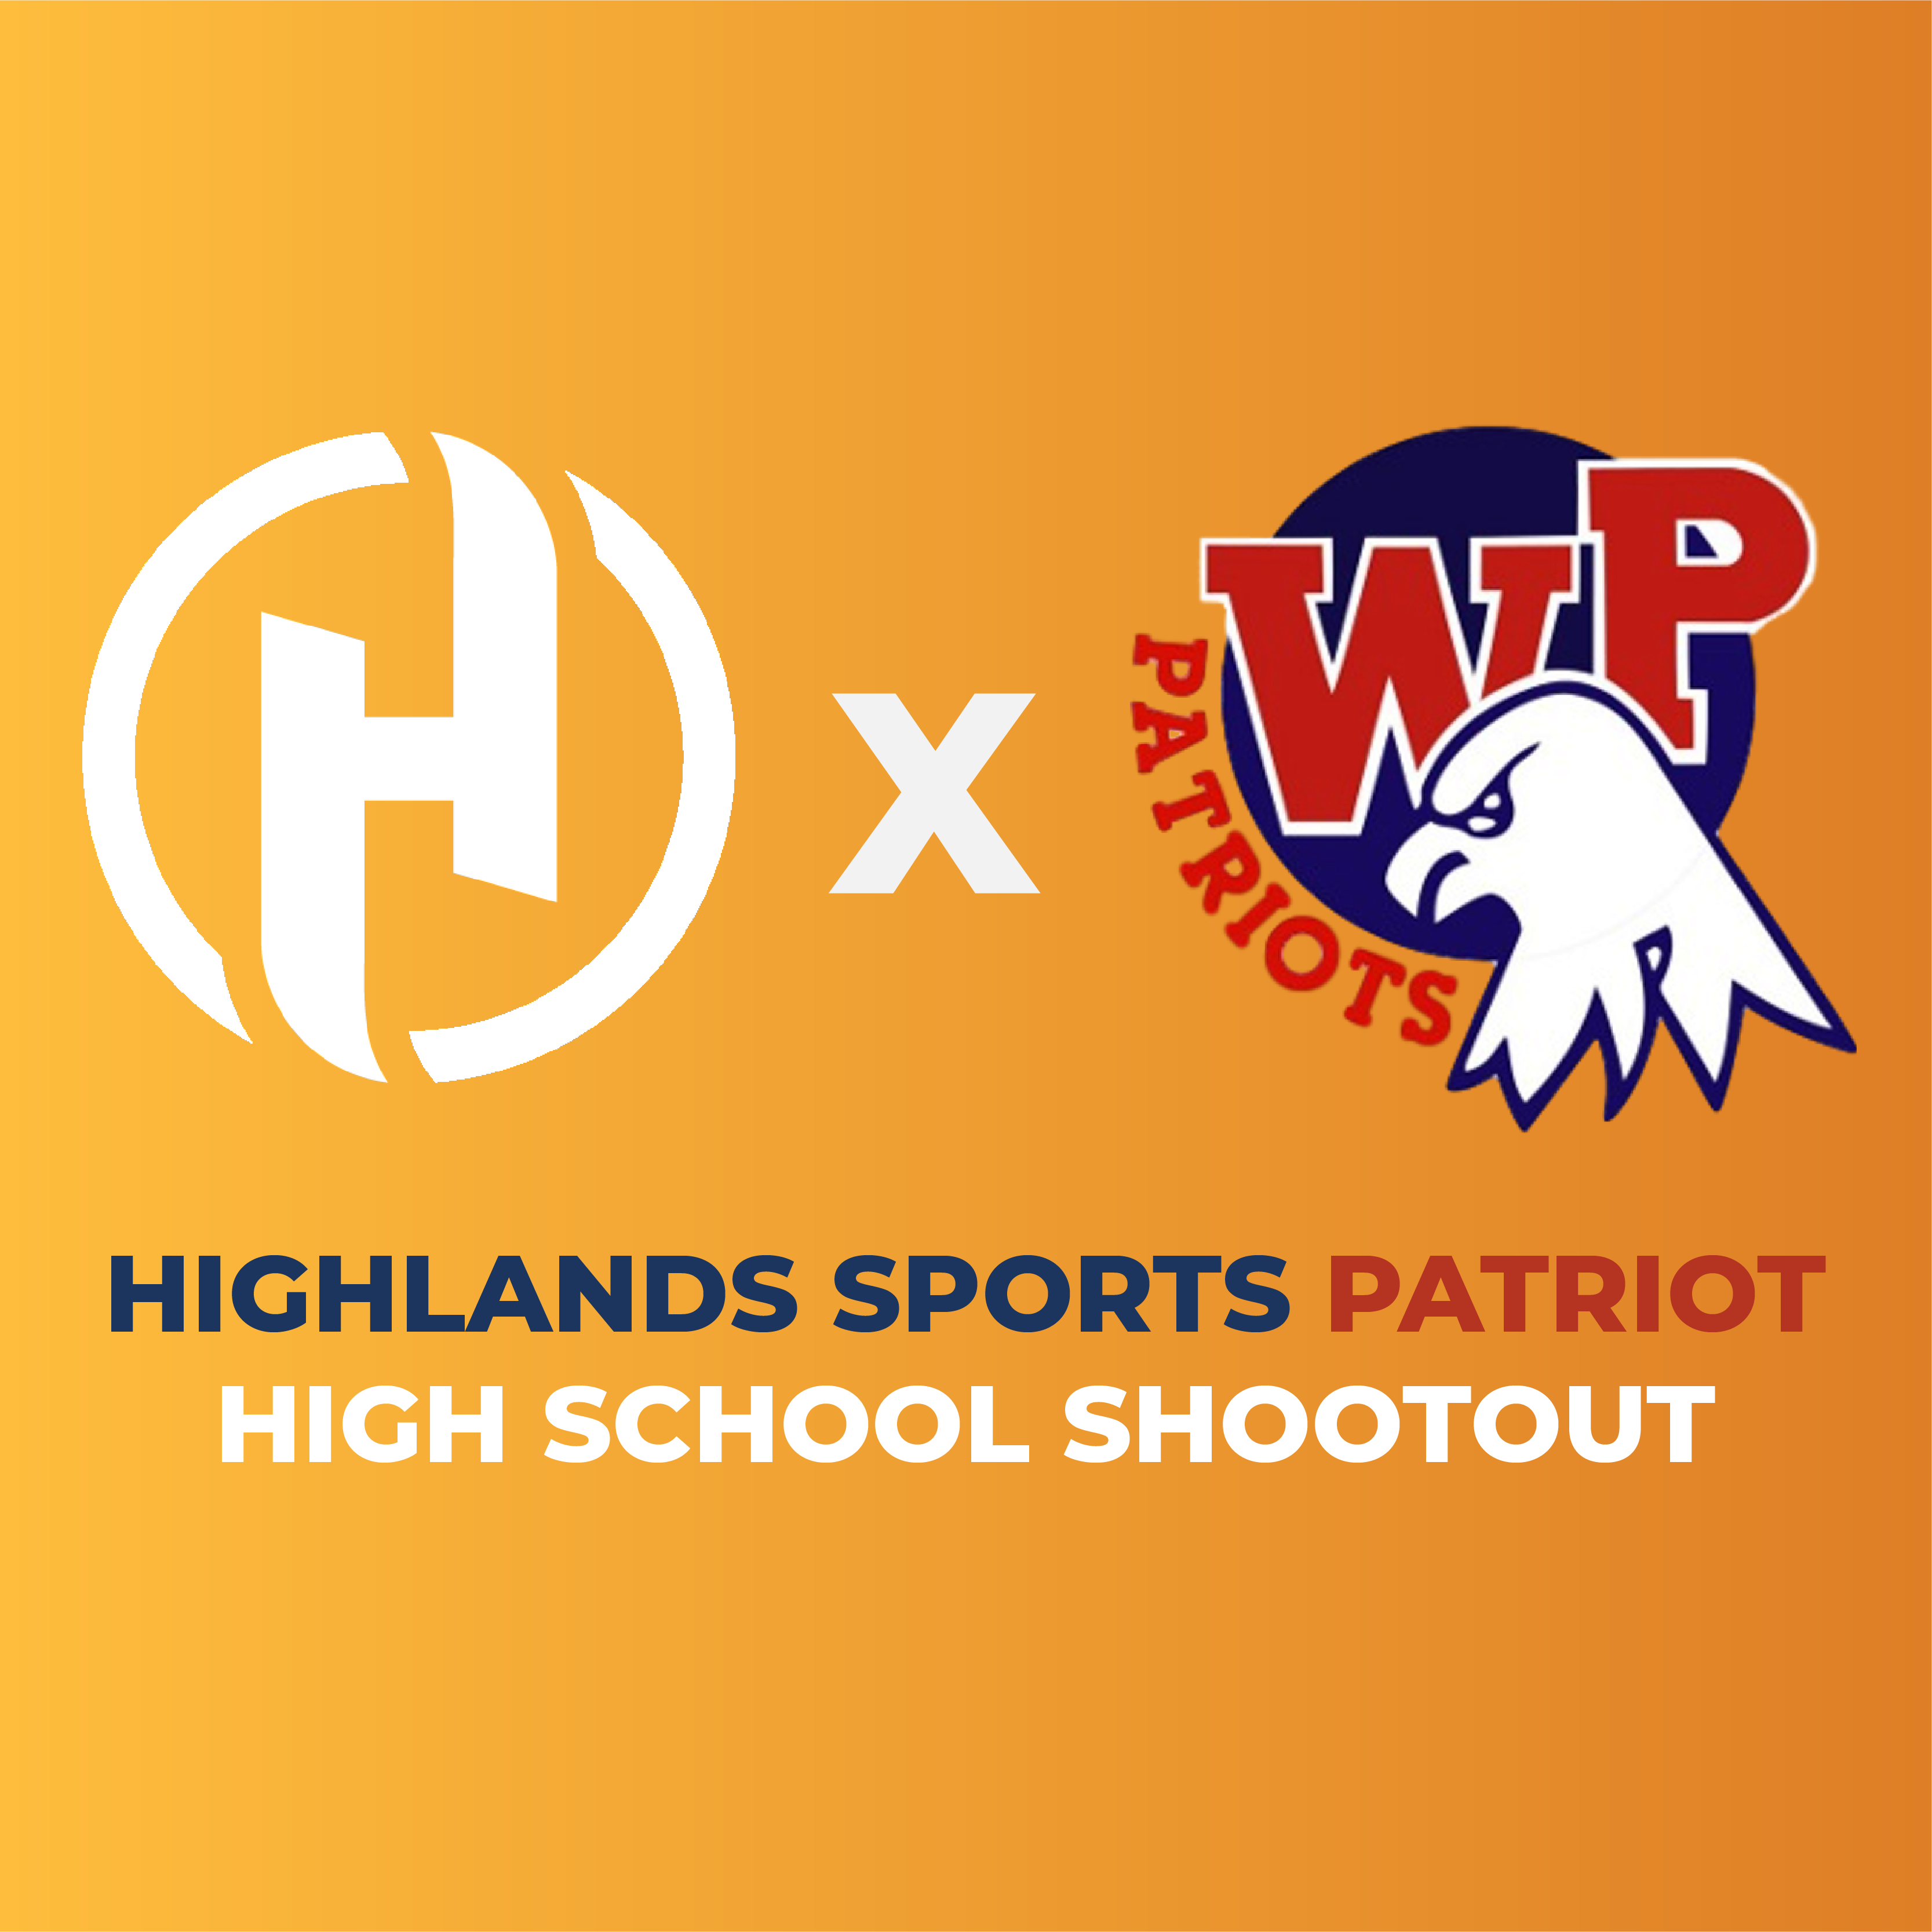 Highlands sports patriot high school shootout